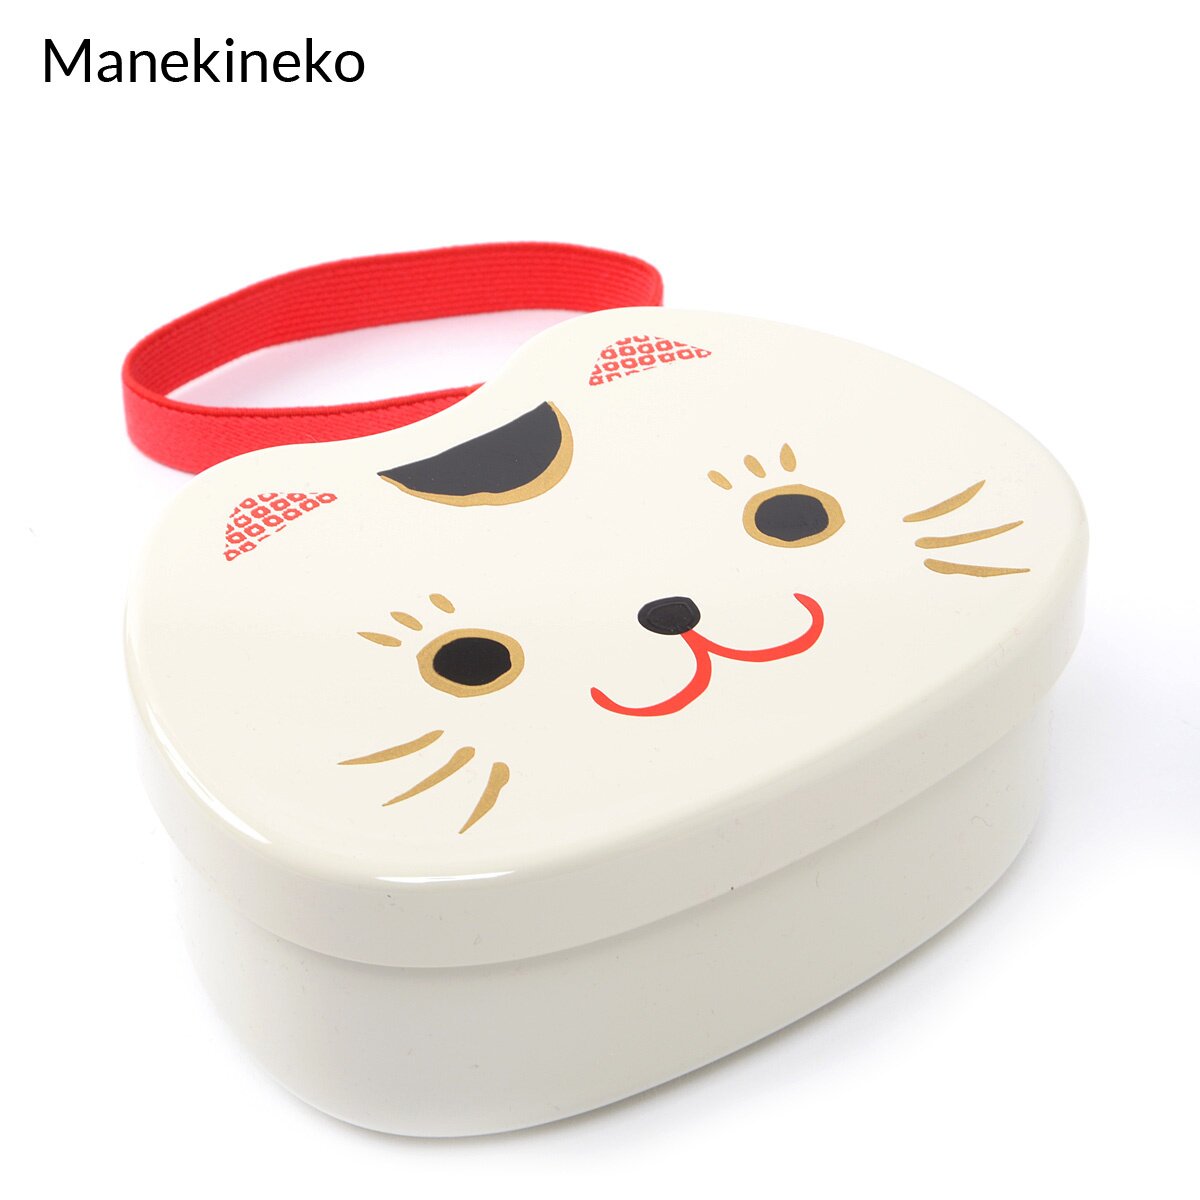 matae4281021 made this incredible Neko themed bento box with a